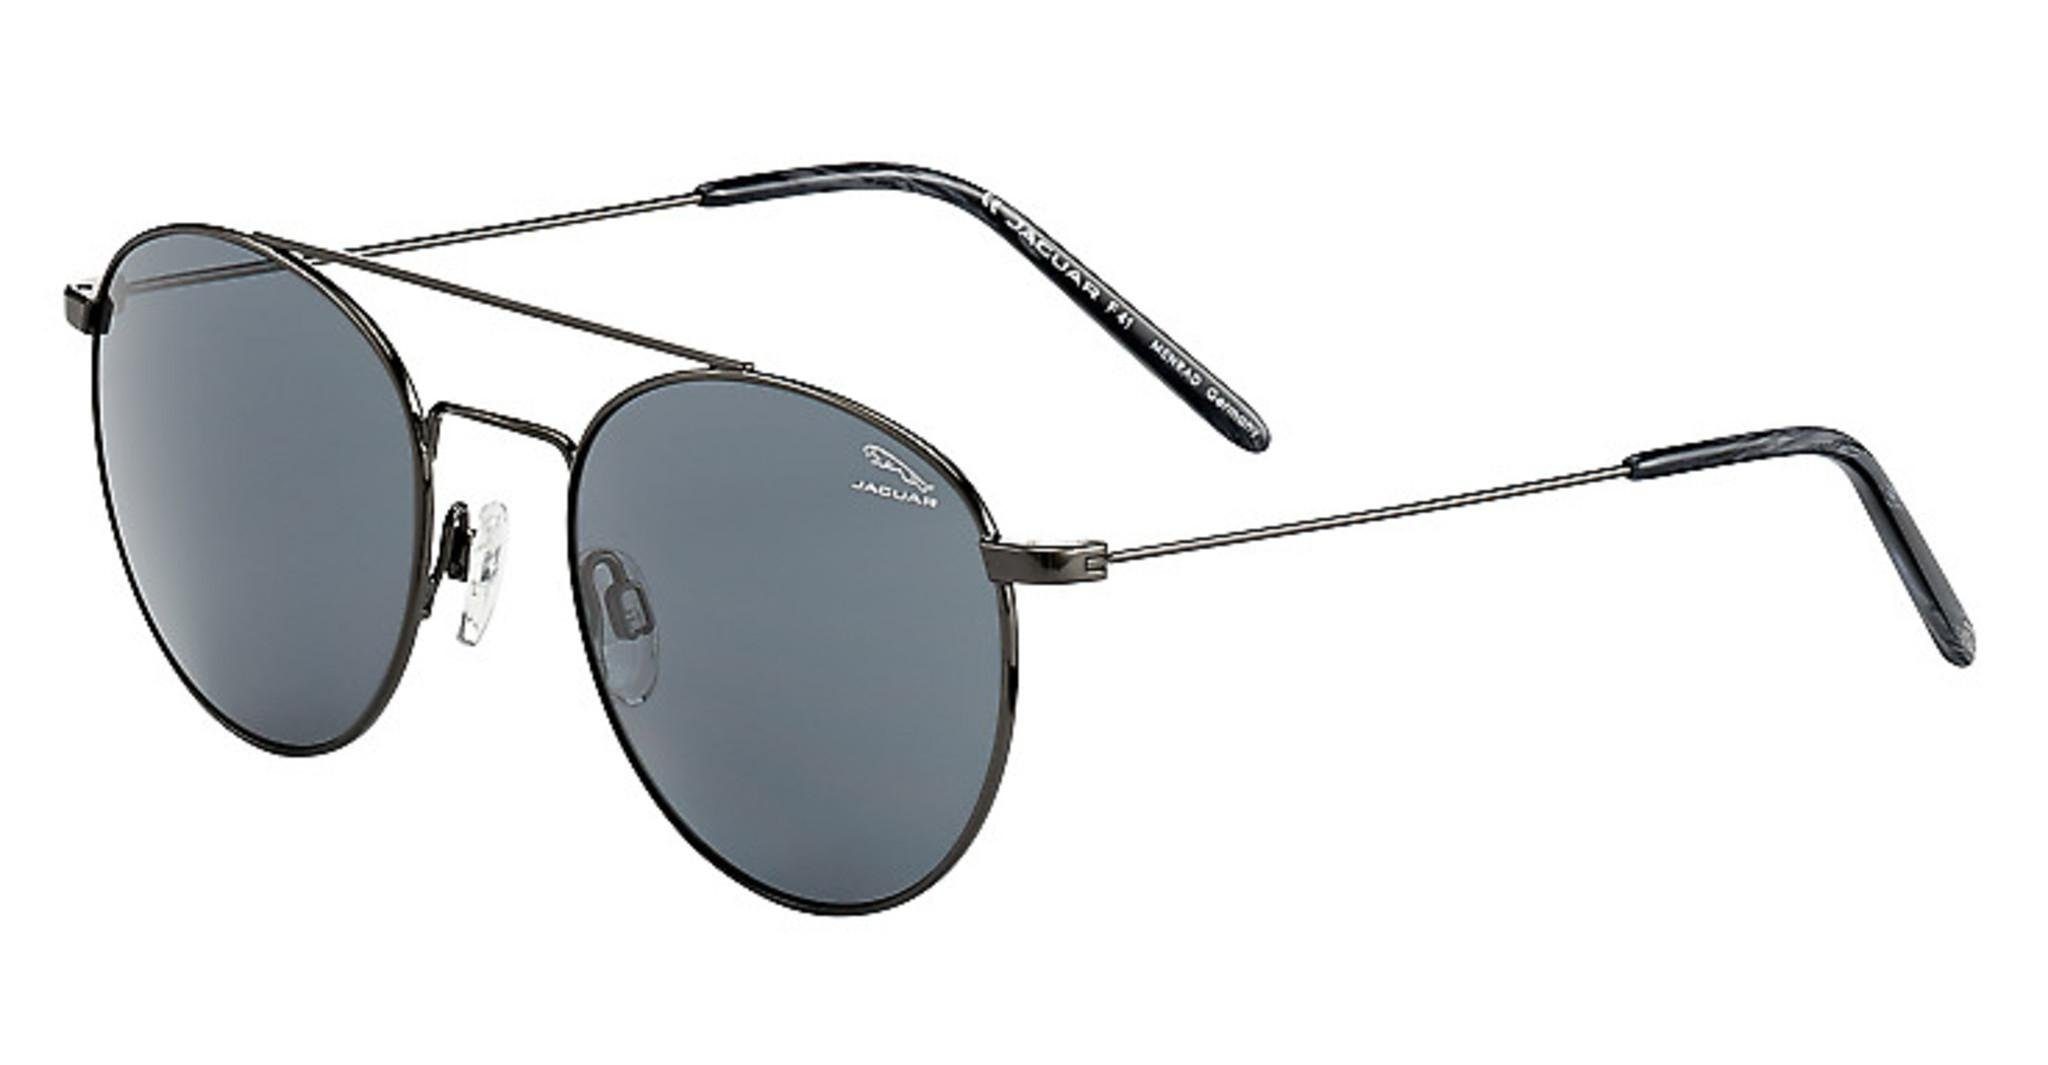 Eyewear grau Jaguar Sonnenbrille 37455